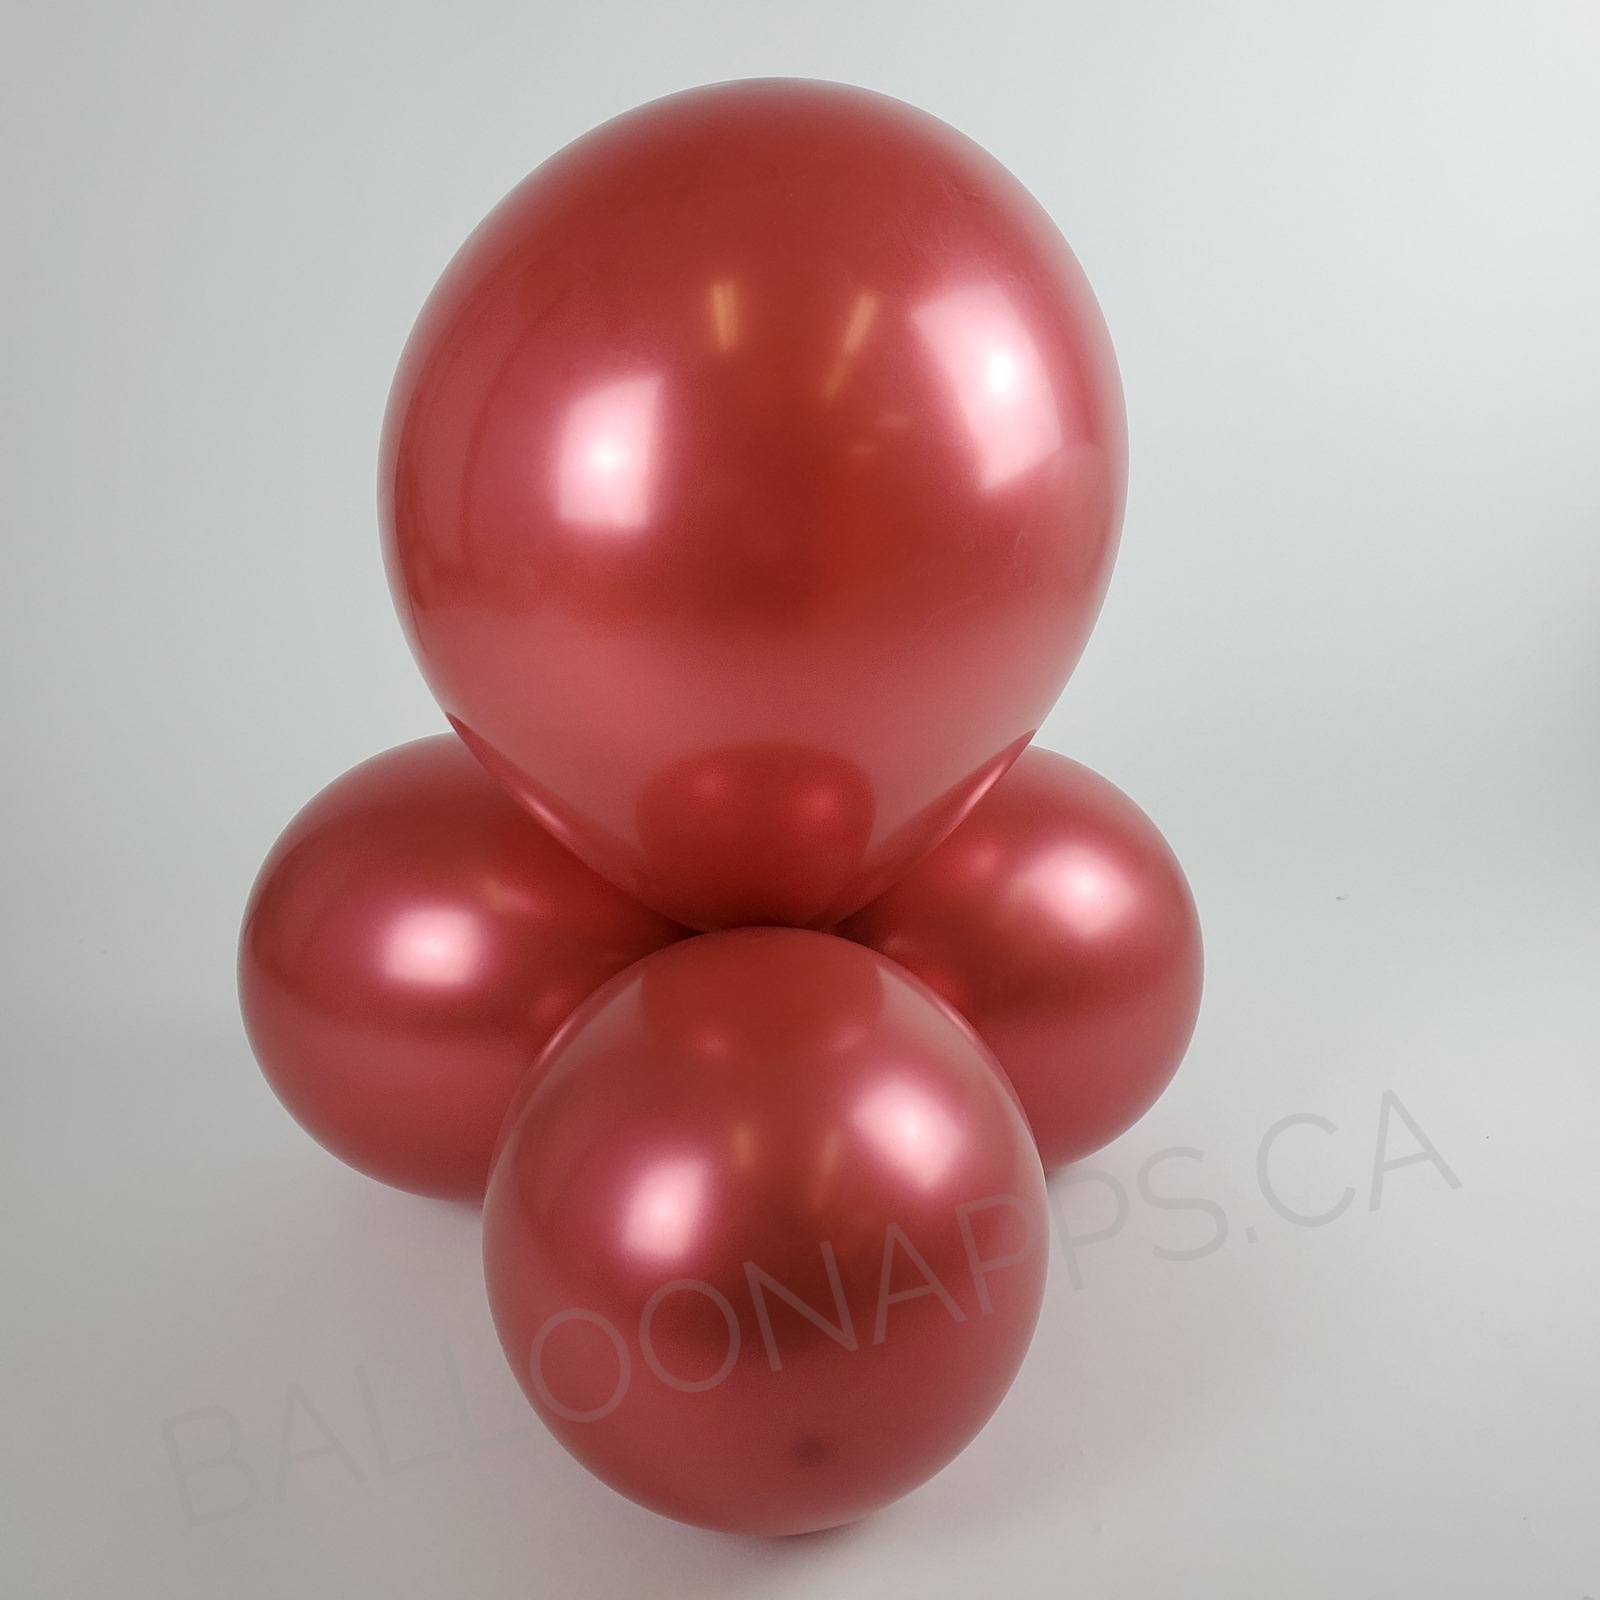 balloon texture Sempertex 260 Reflex Crystal Red balloons